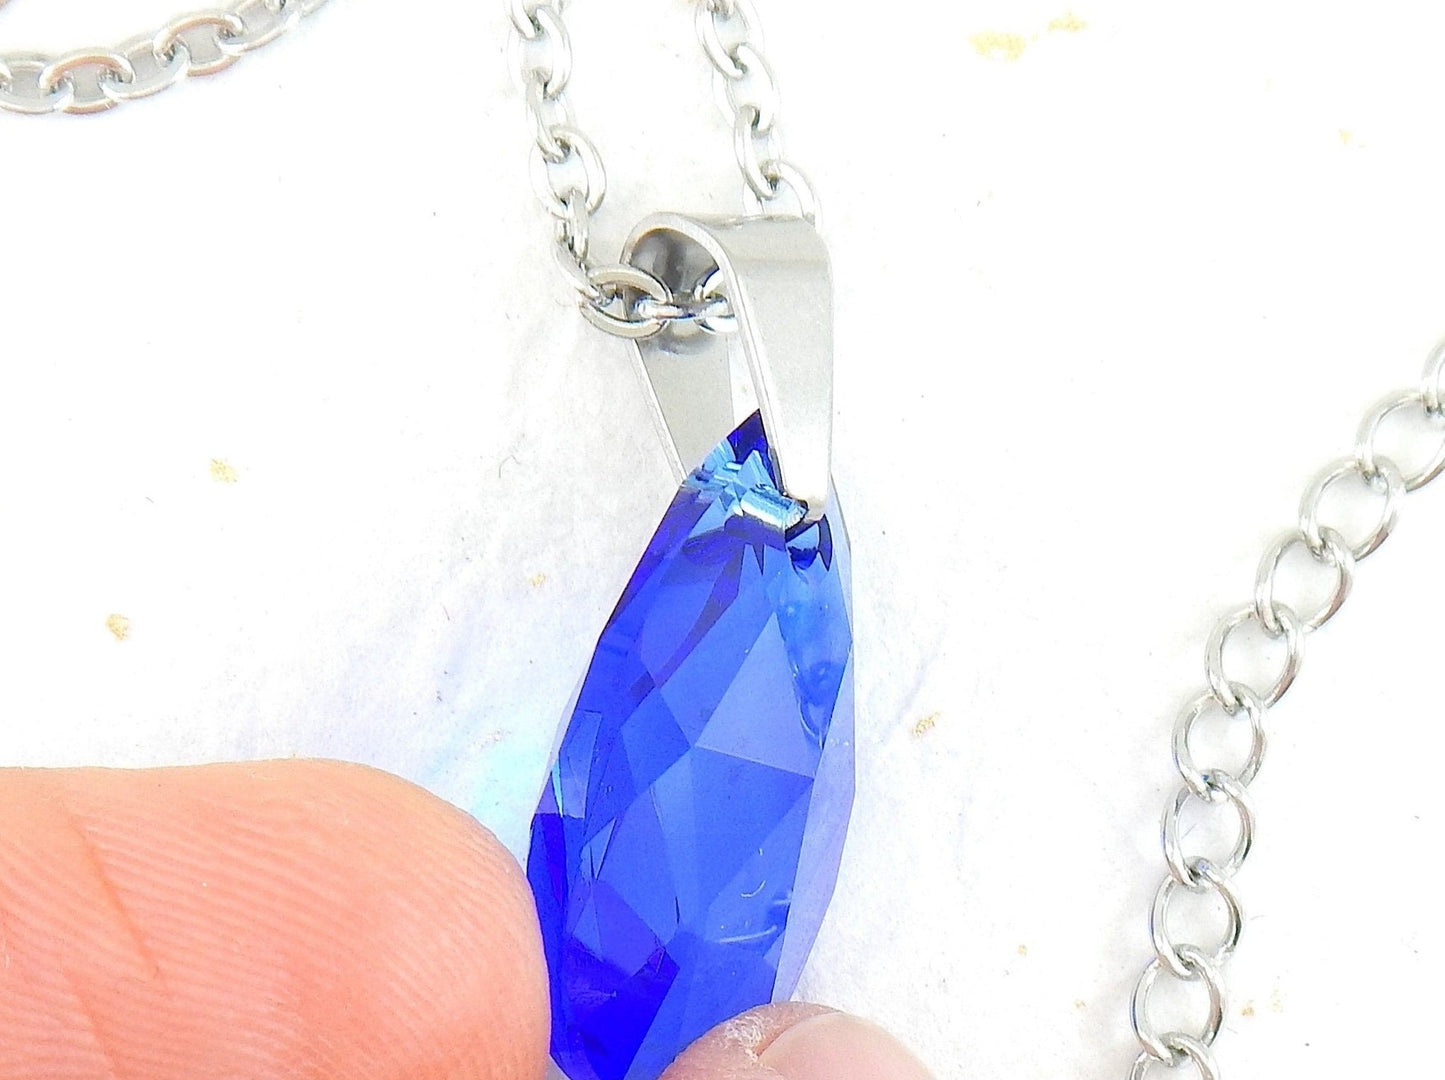 Collier 15 po avec pendentif goutte de cristal Swarovski 20mm bleu Majestic, chaîne acier inoxydable